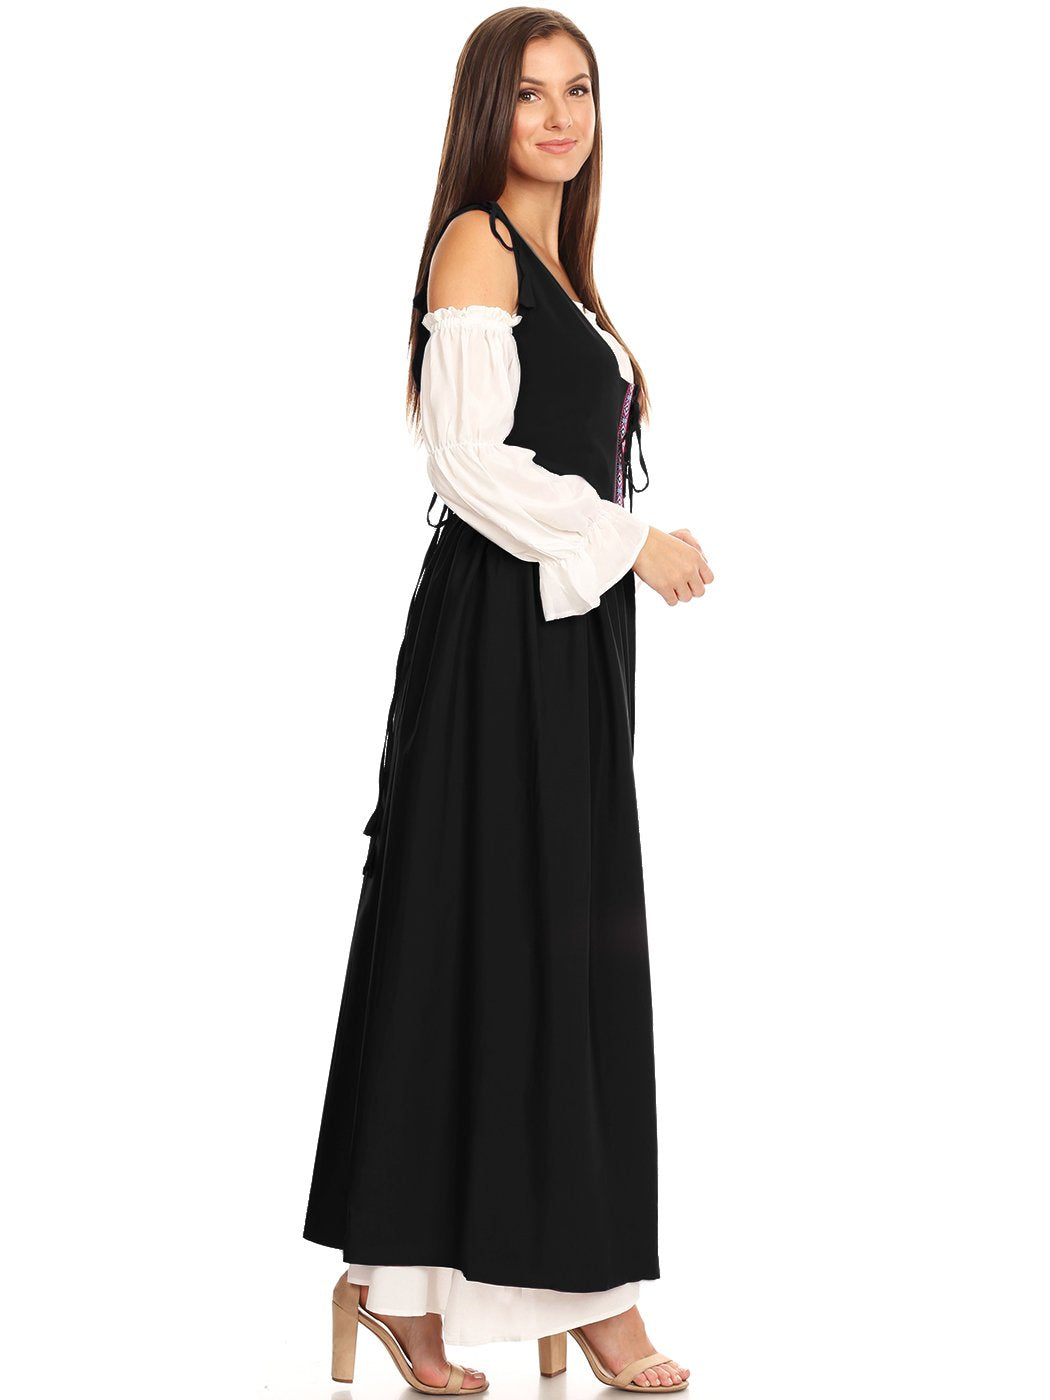 Renaissance Medieval/Irish Off-The-Shoulder Dress Set